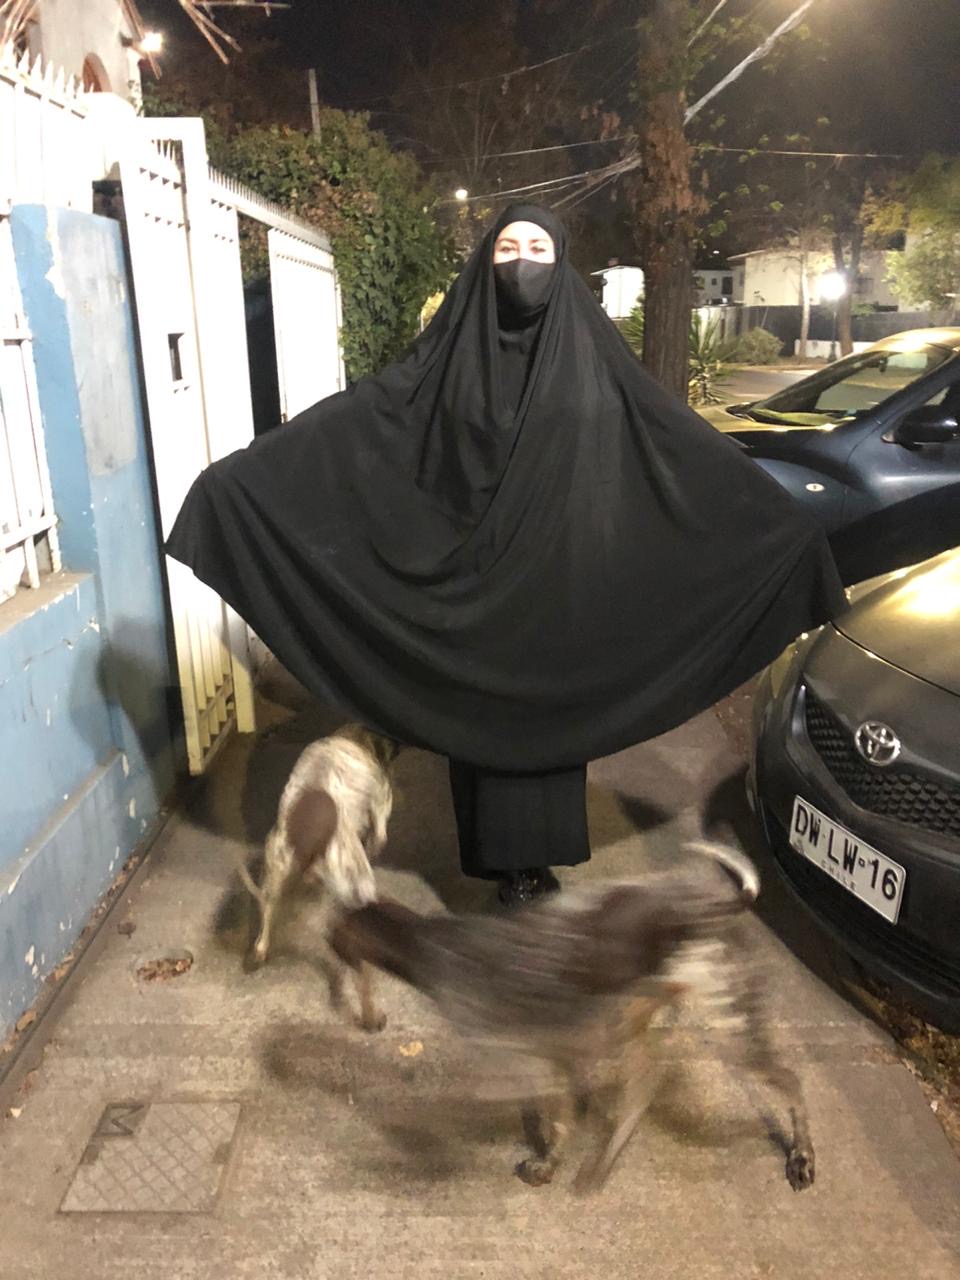 Experiencia burka. Silvia Veloso